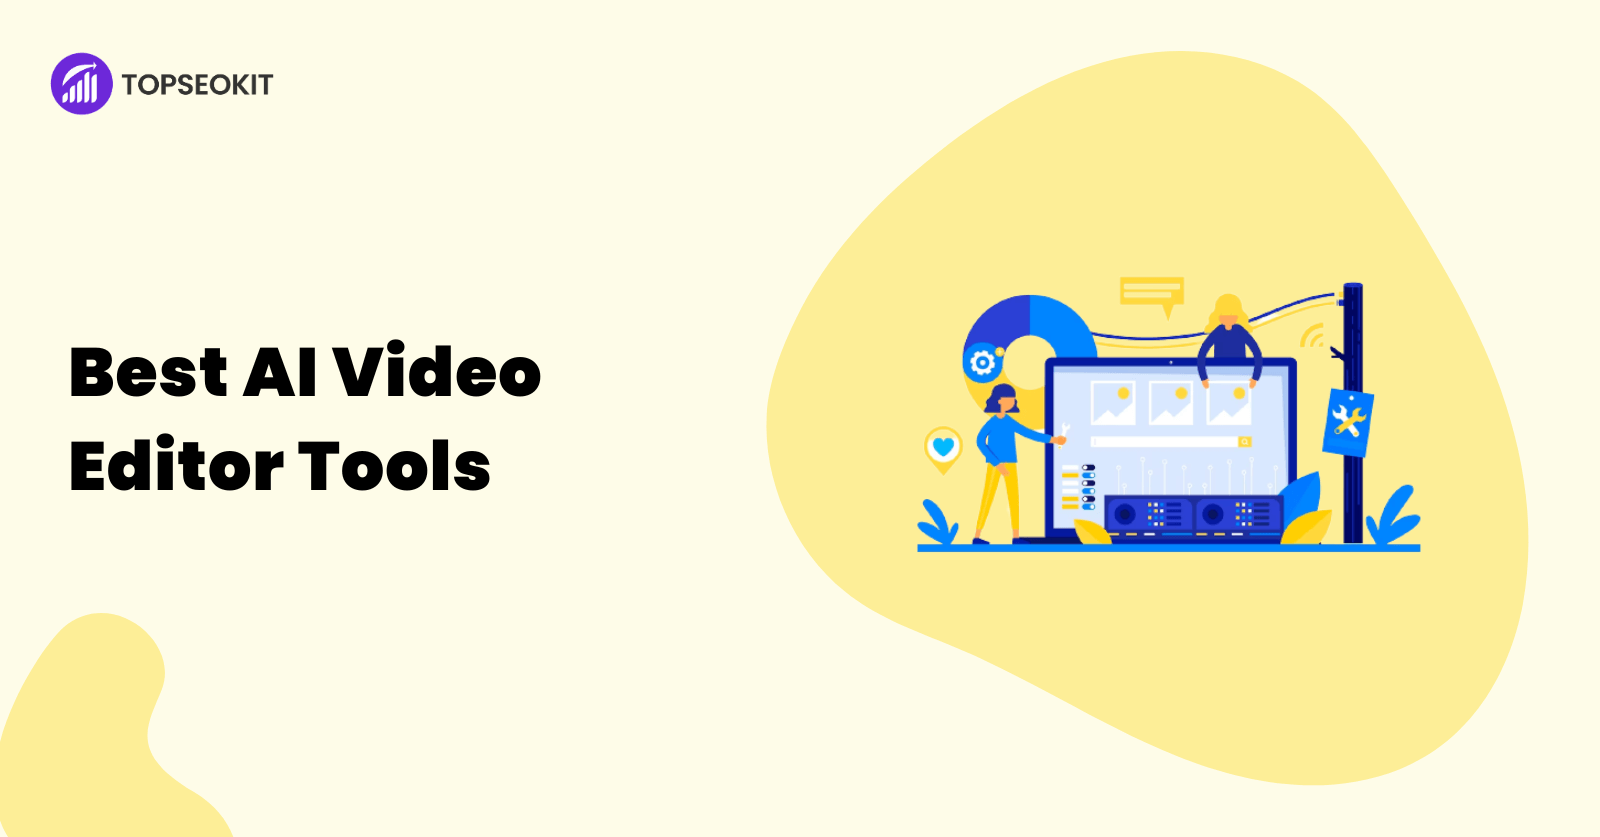 3 best AI video editor tools